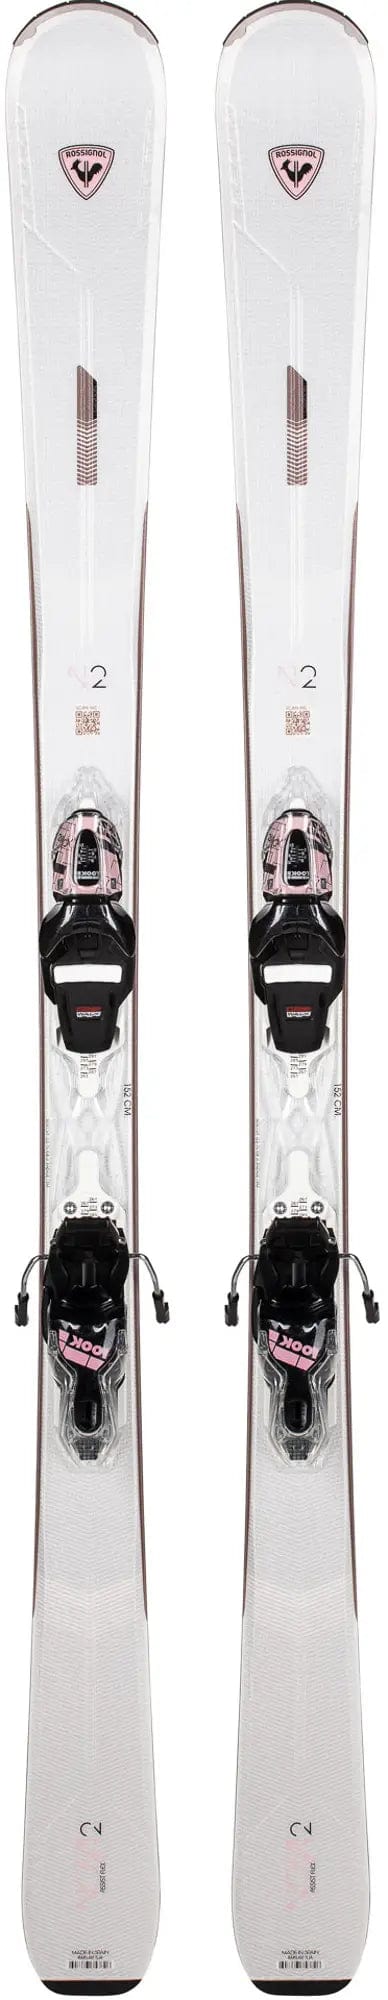 ROSSIGNOL 136 / WHITE Rossignol Nova 2 Ski and Binding Package